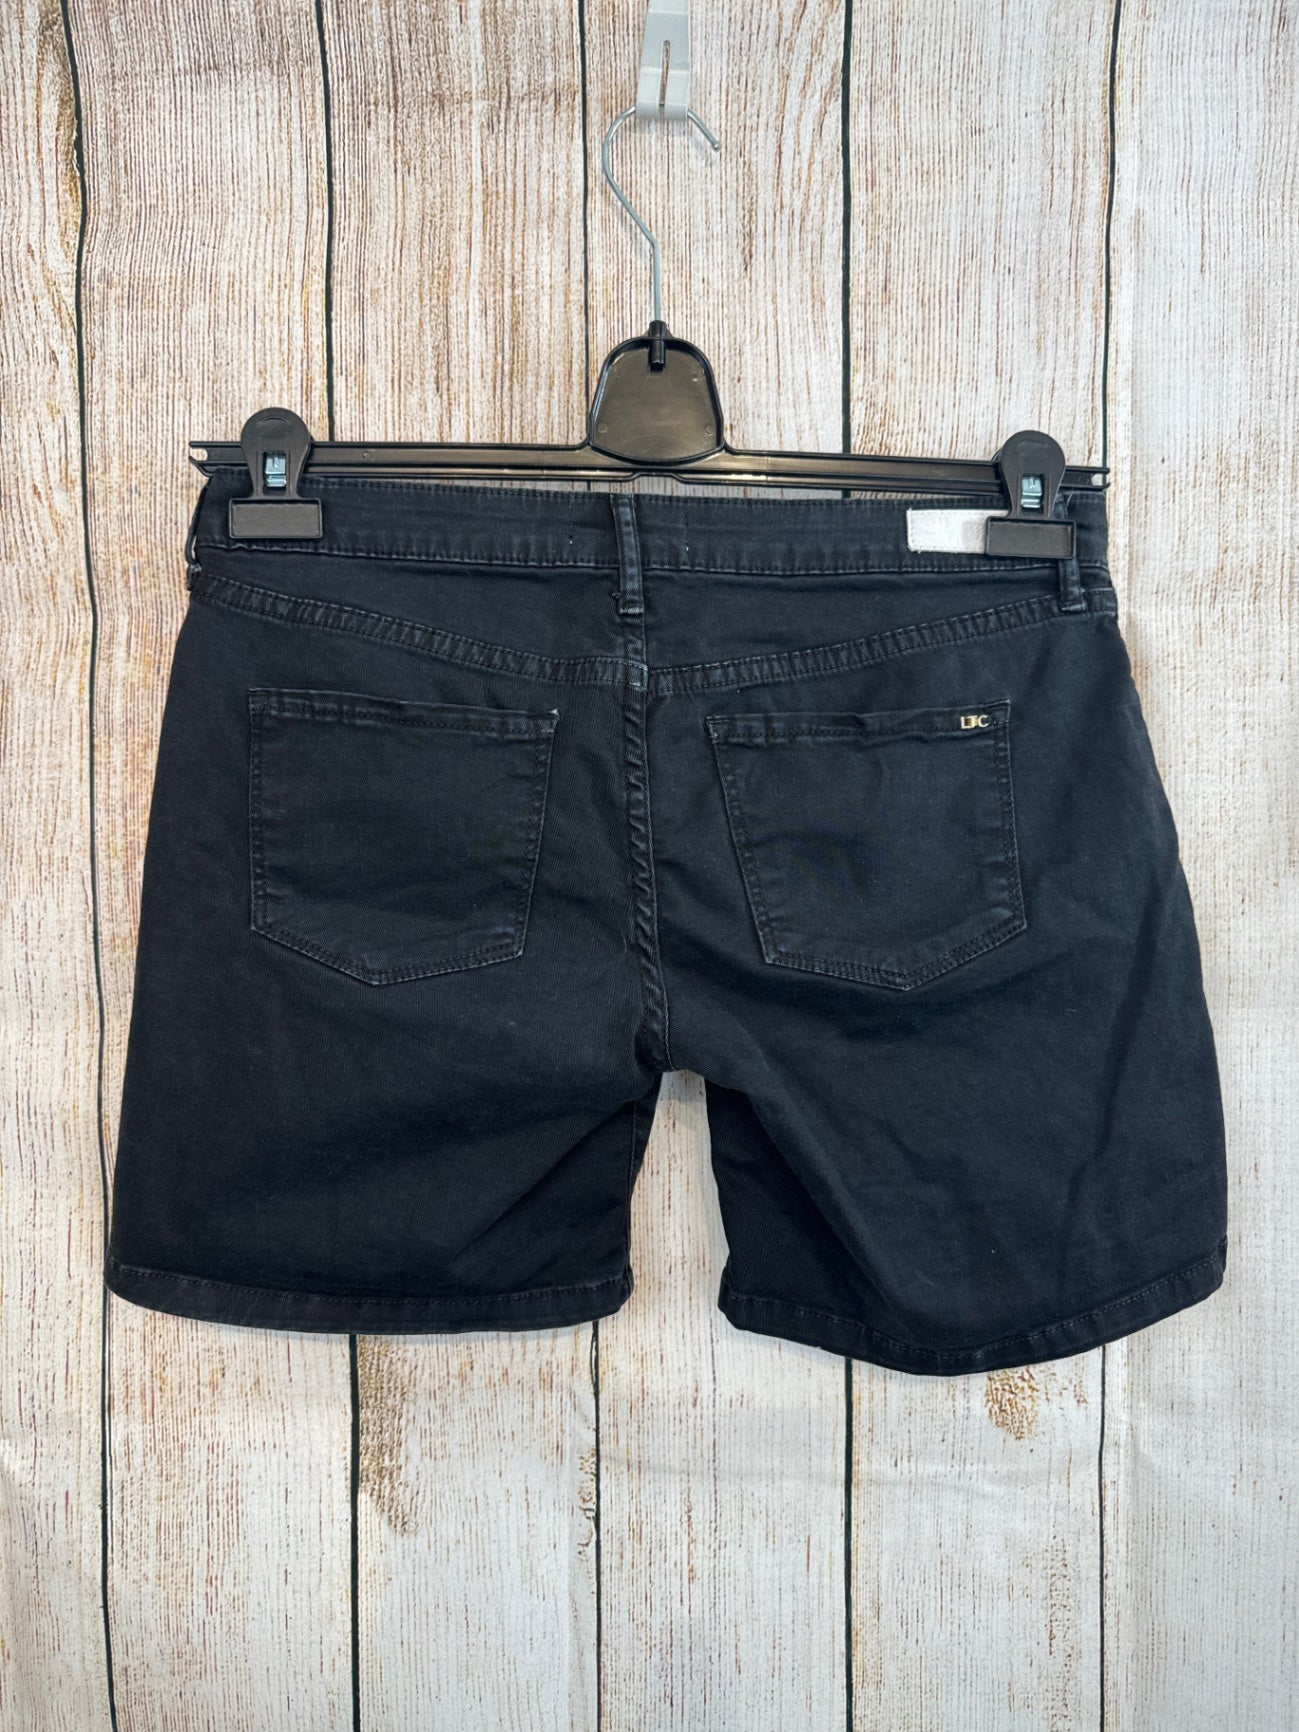 kurze Jeans Shorts Schwarz Gr. M